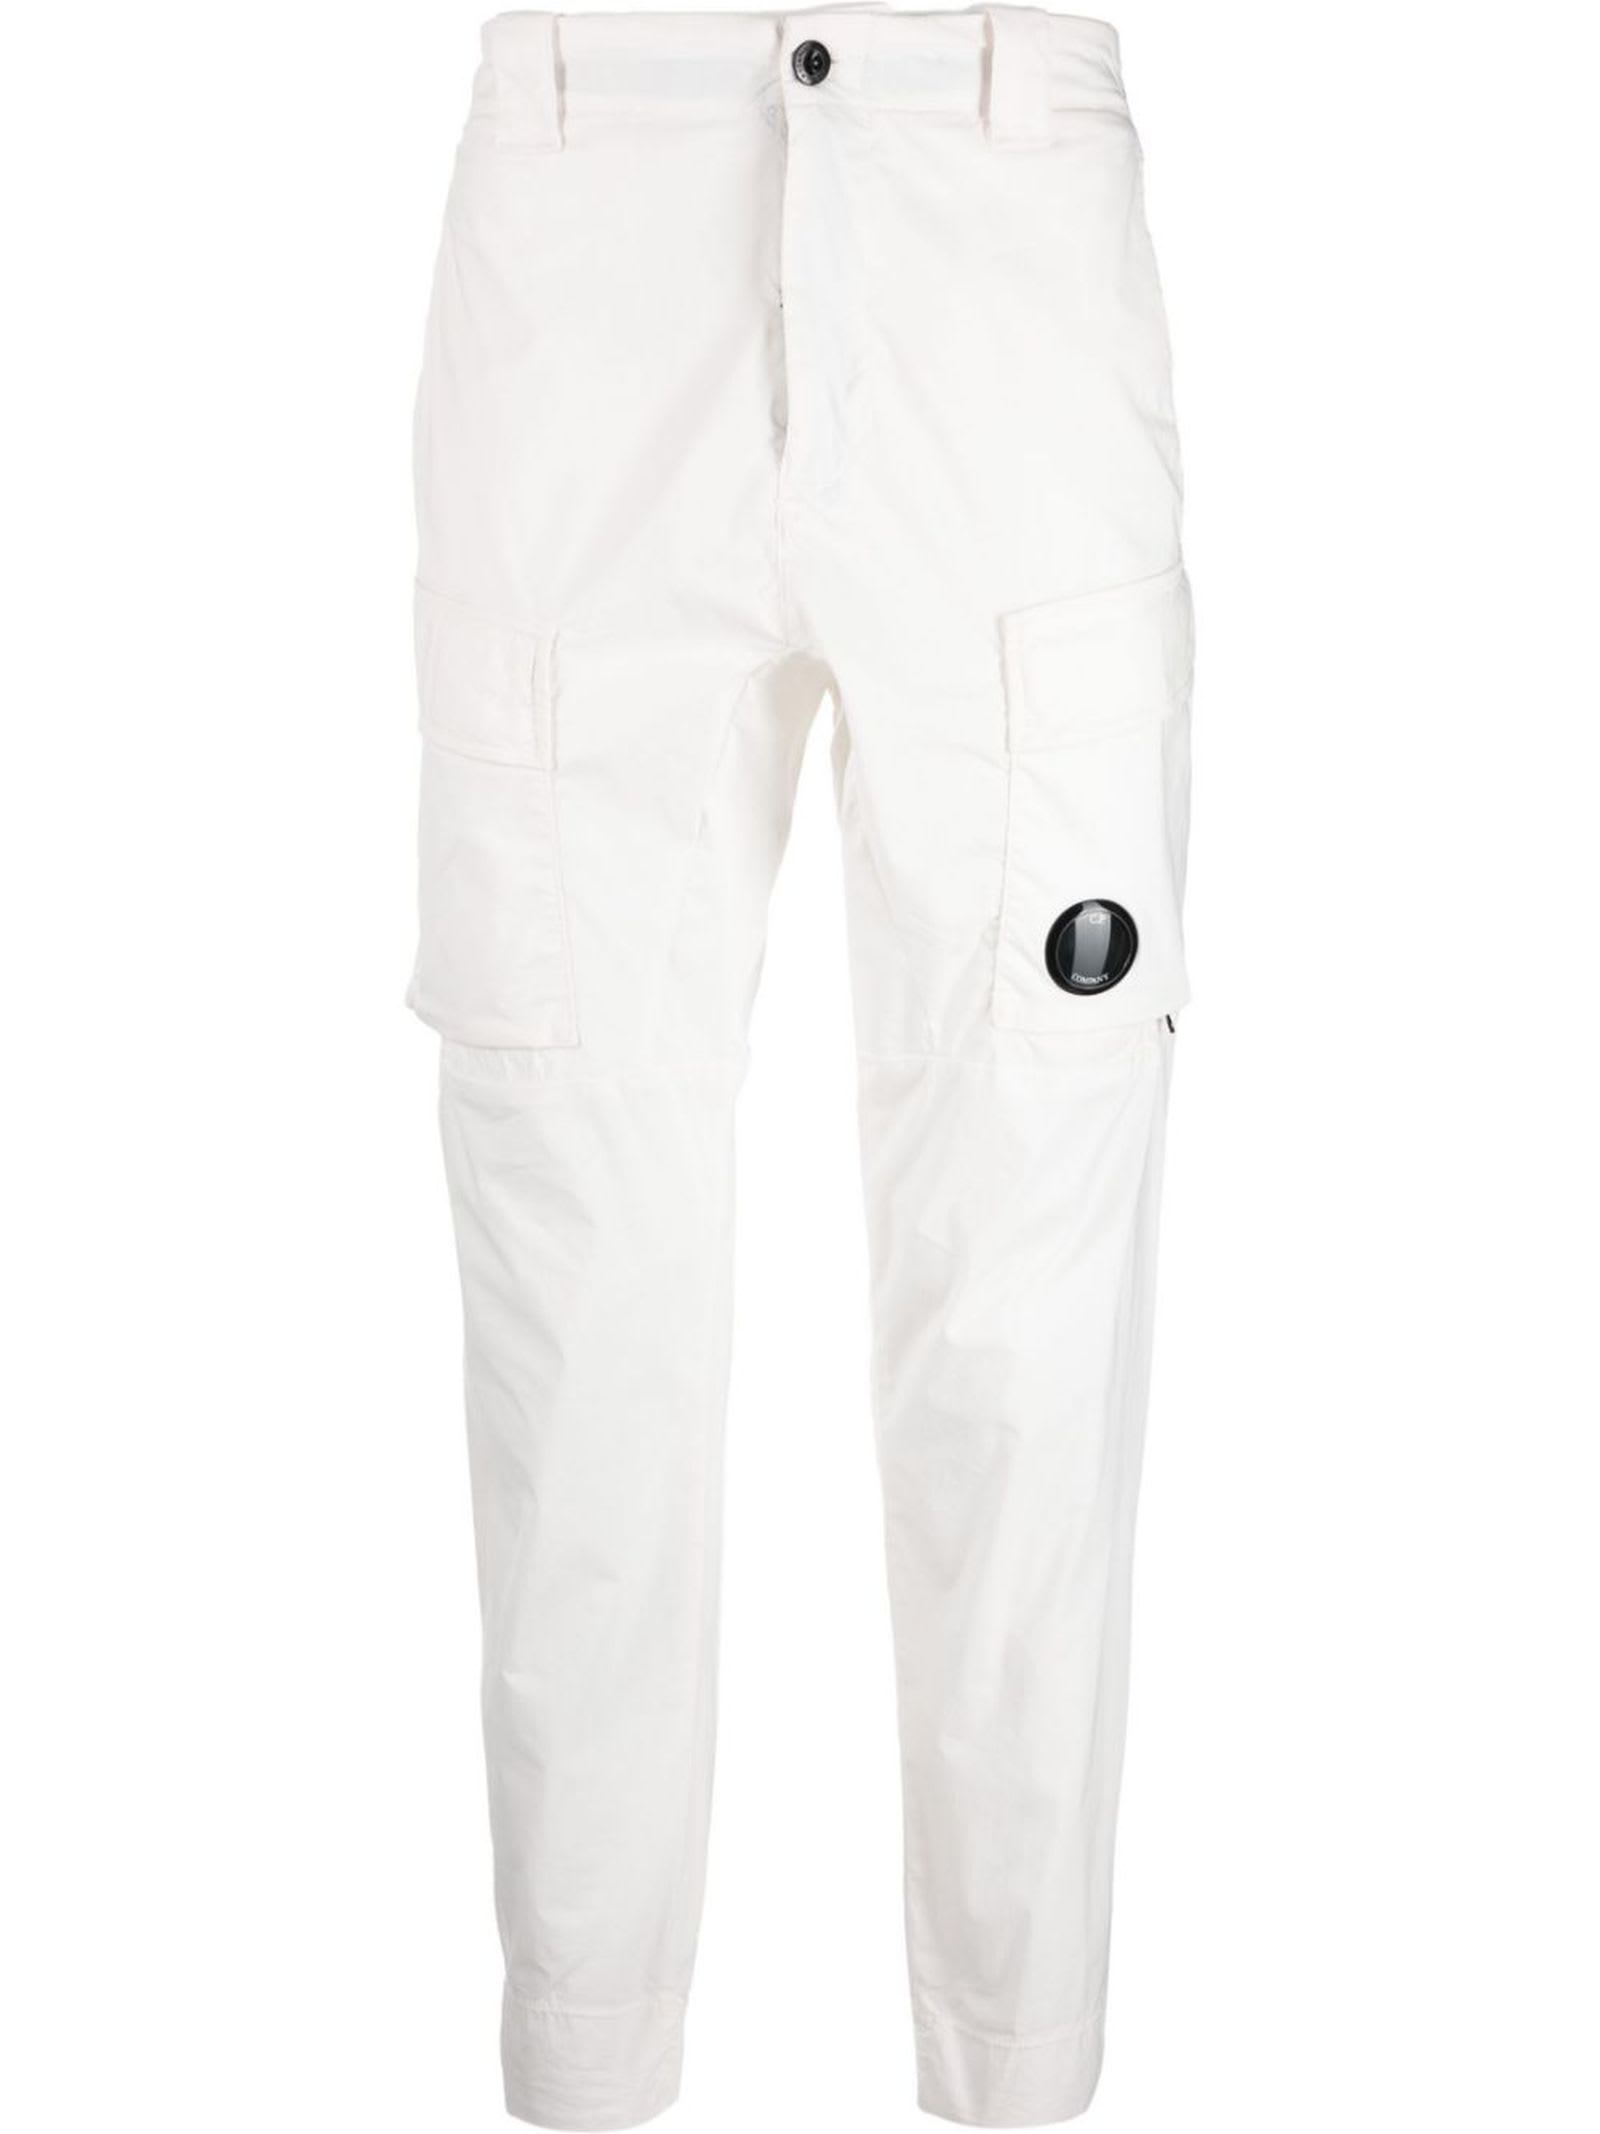 C.P. Company White Cotton Blend Trousers